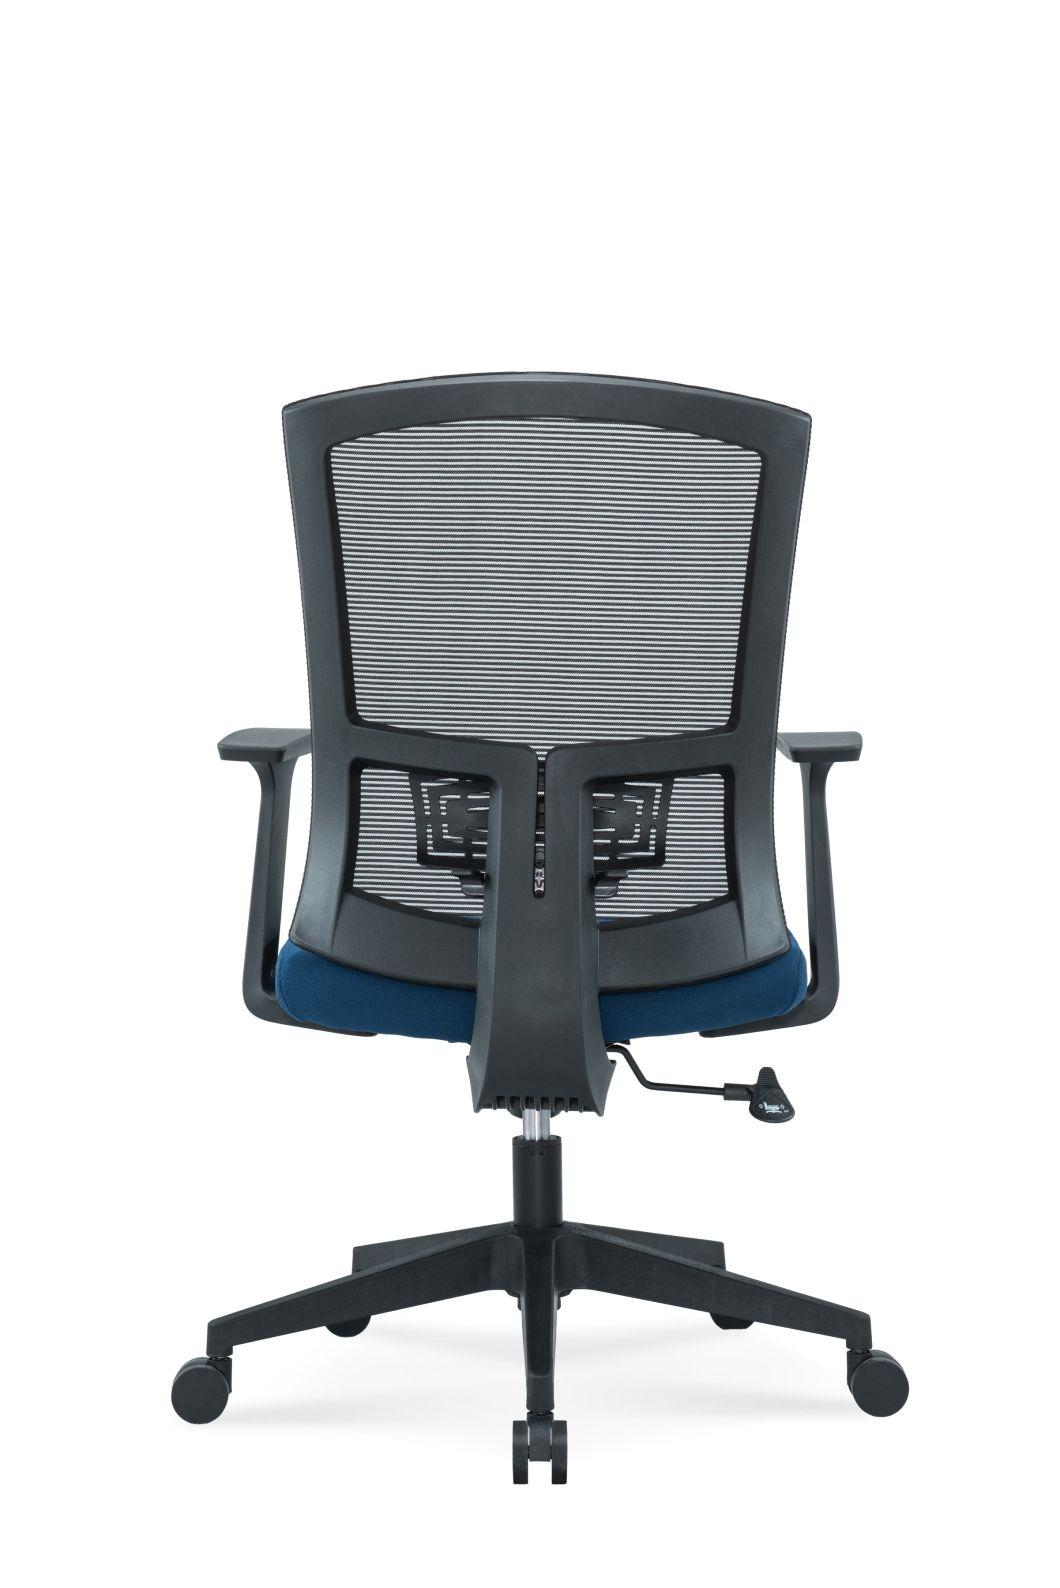 Medium Back Swivel Lumbar Support Staff Modern Fabric Office Chair